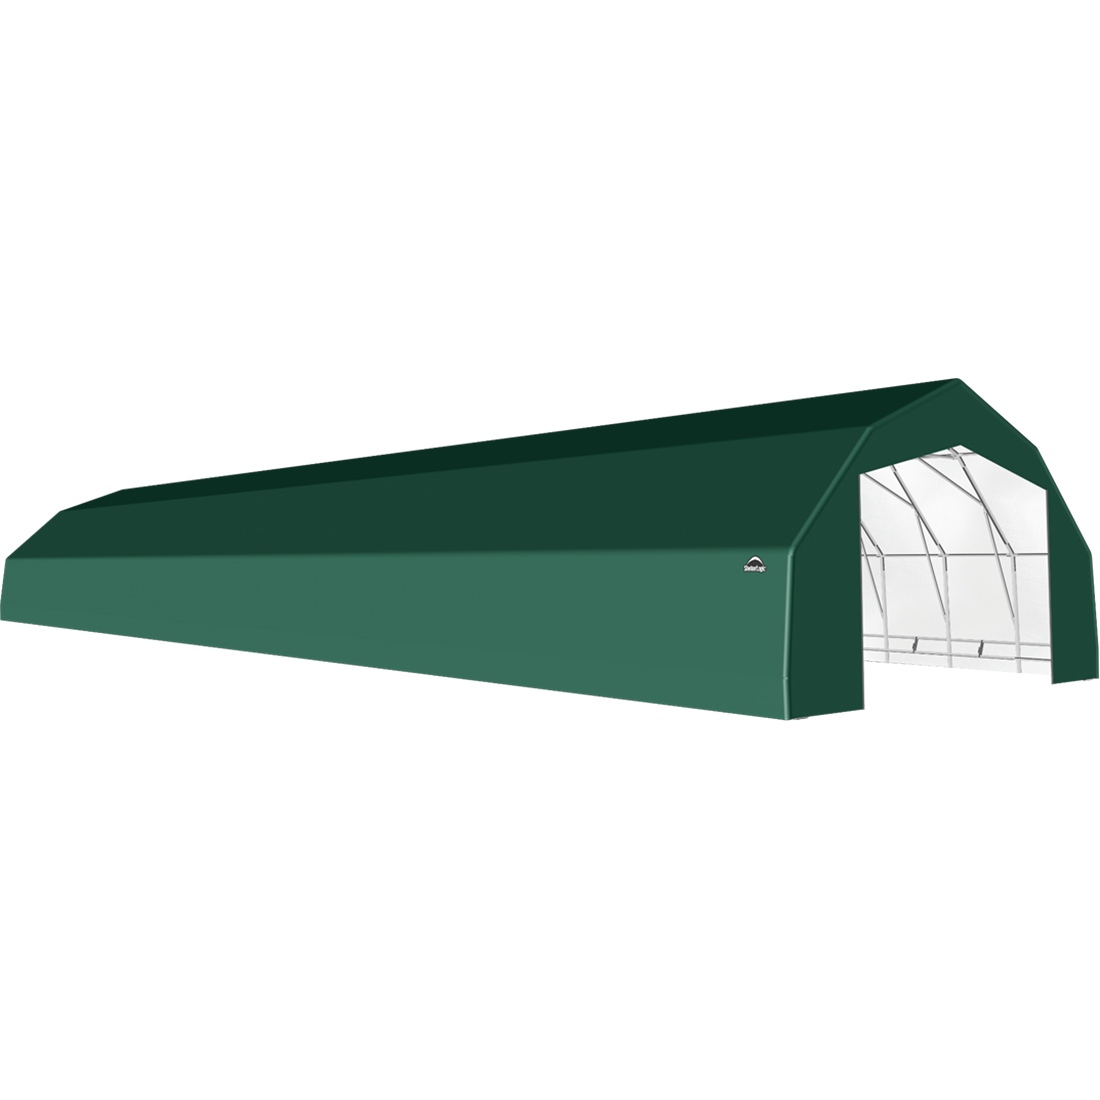 ShelterTech SP Series Barn Shelter, 25 ft. x 92 ft. x 14 ft. Heavy Duty PVC 14.5 oz. Green